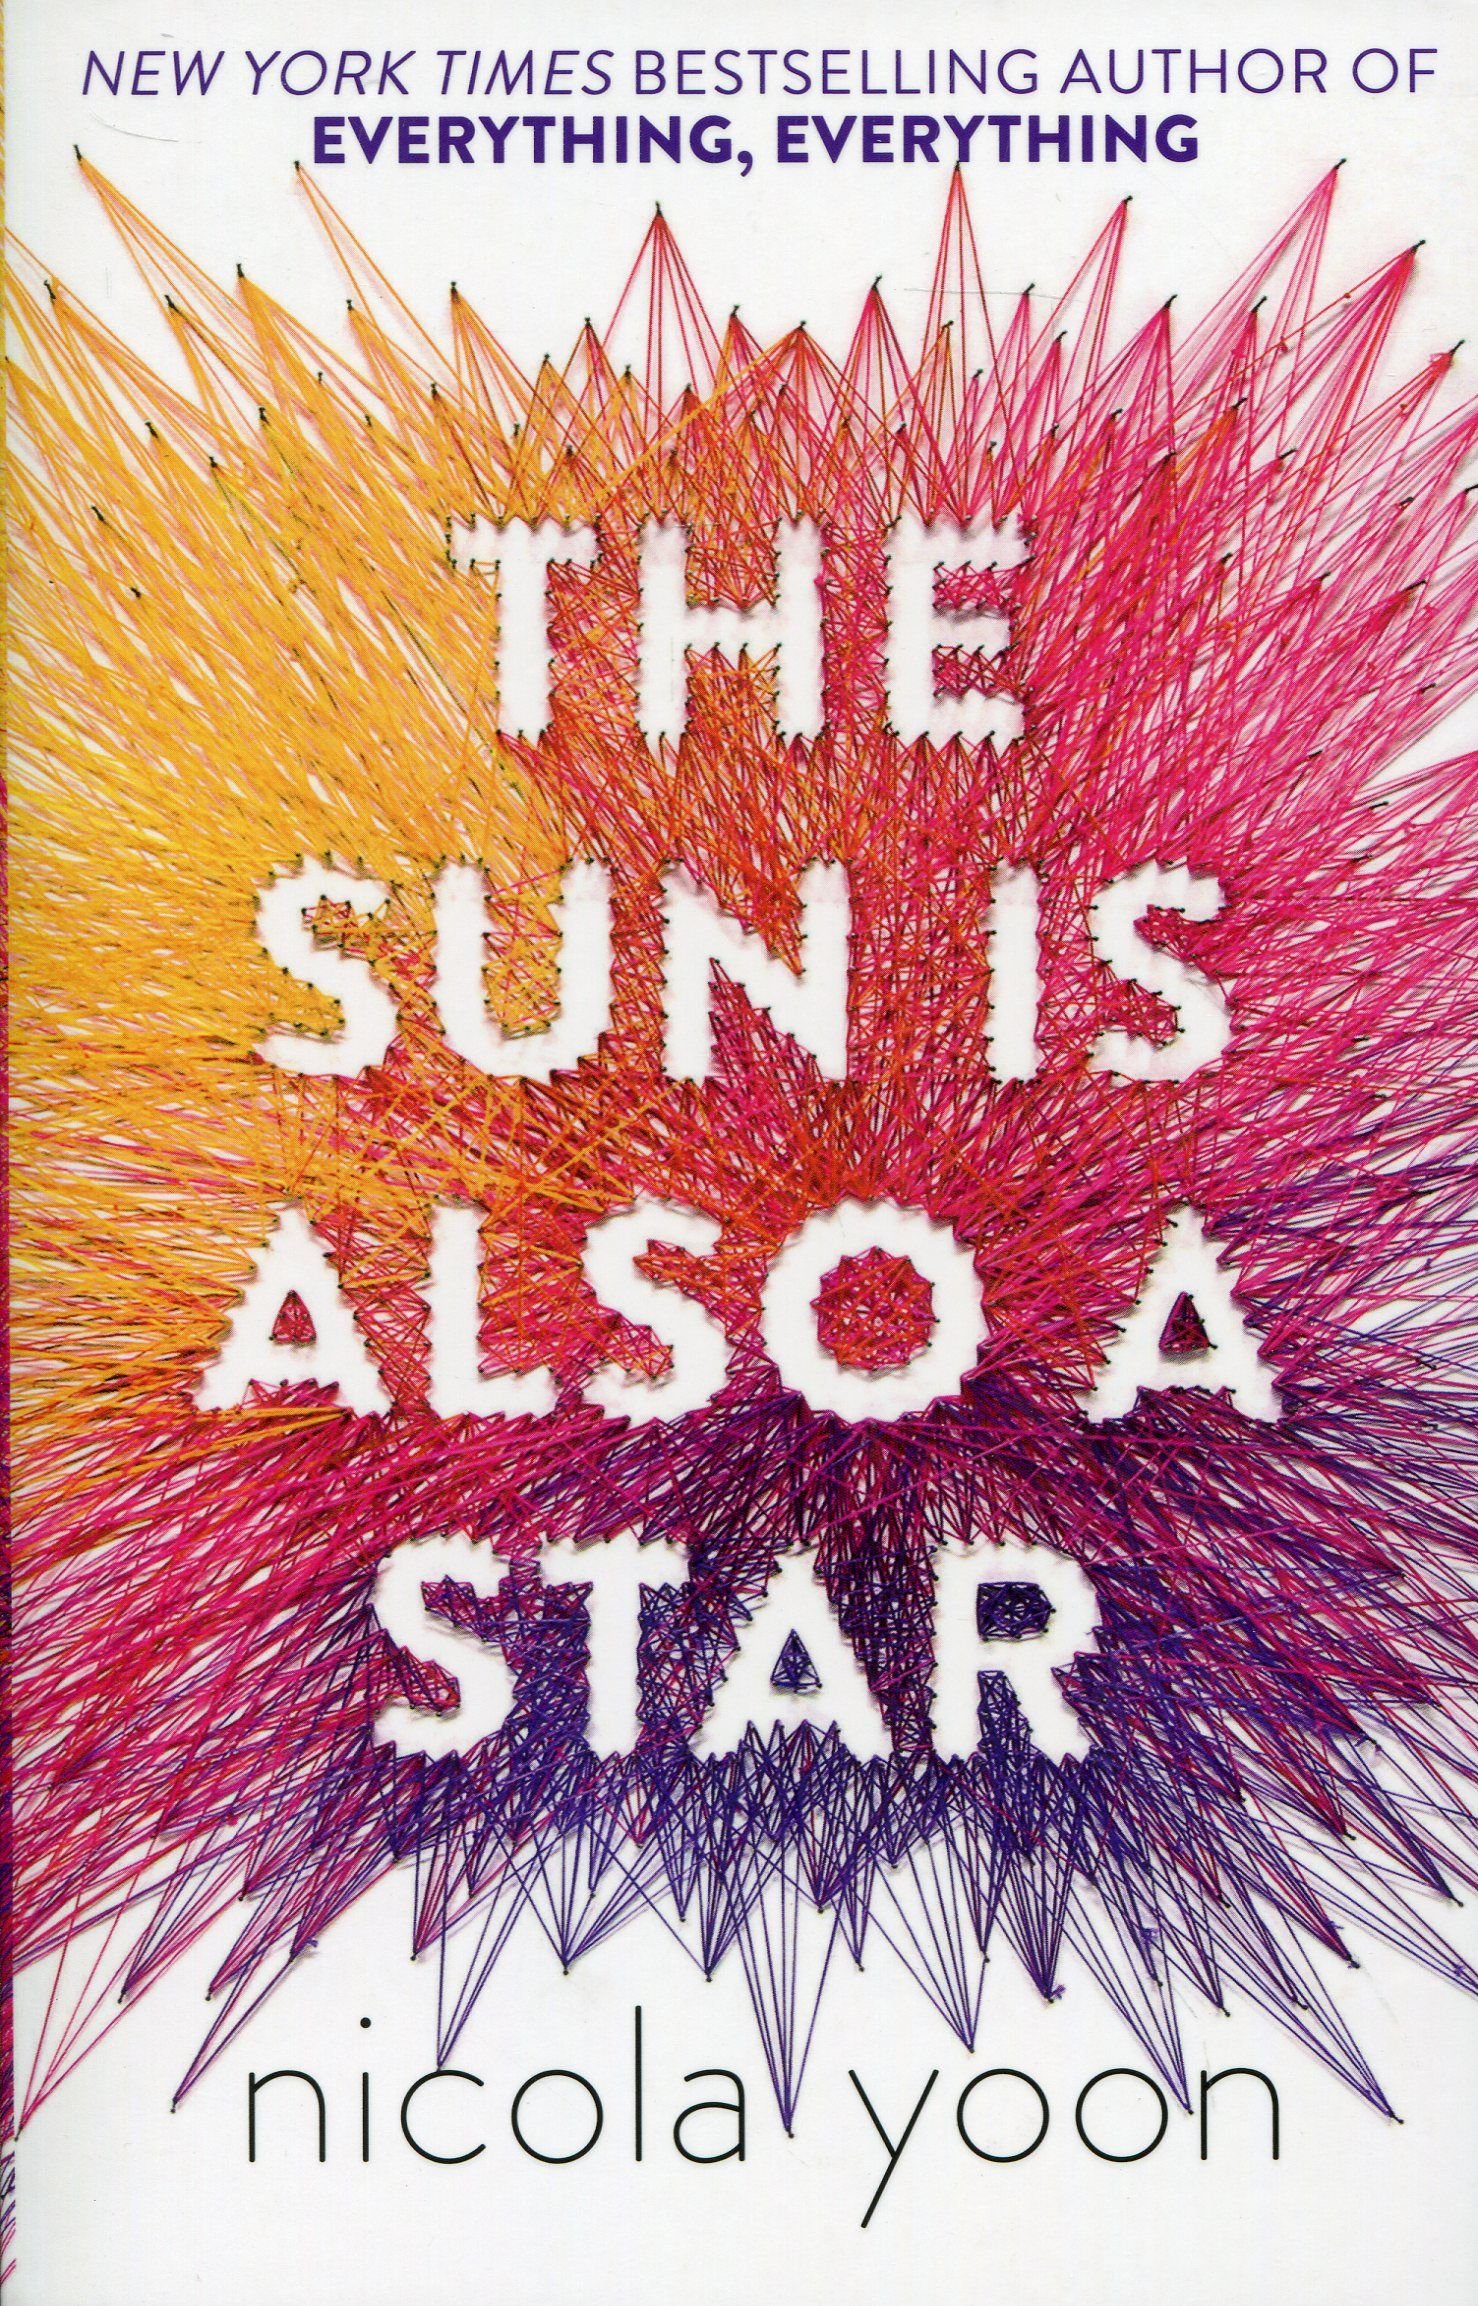 Coperta cărții: The Sun is also a Star - lonnieyoungblood.com